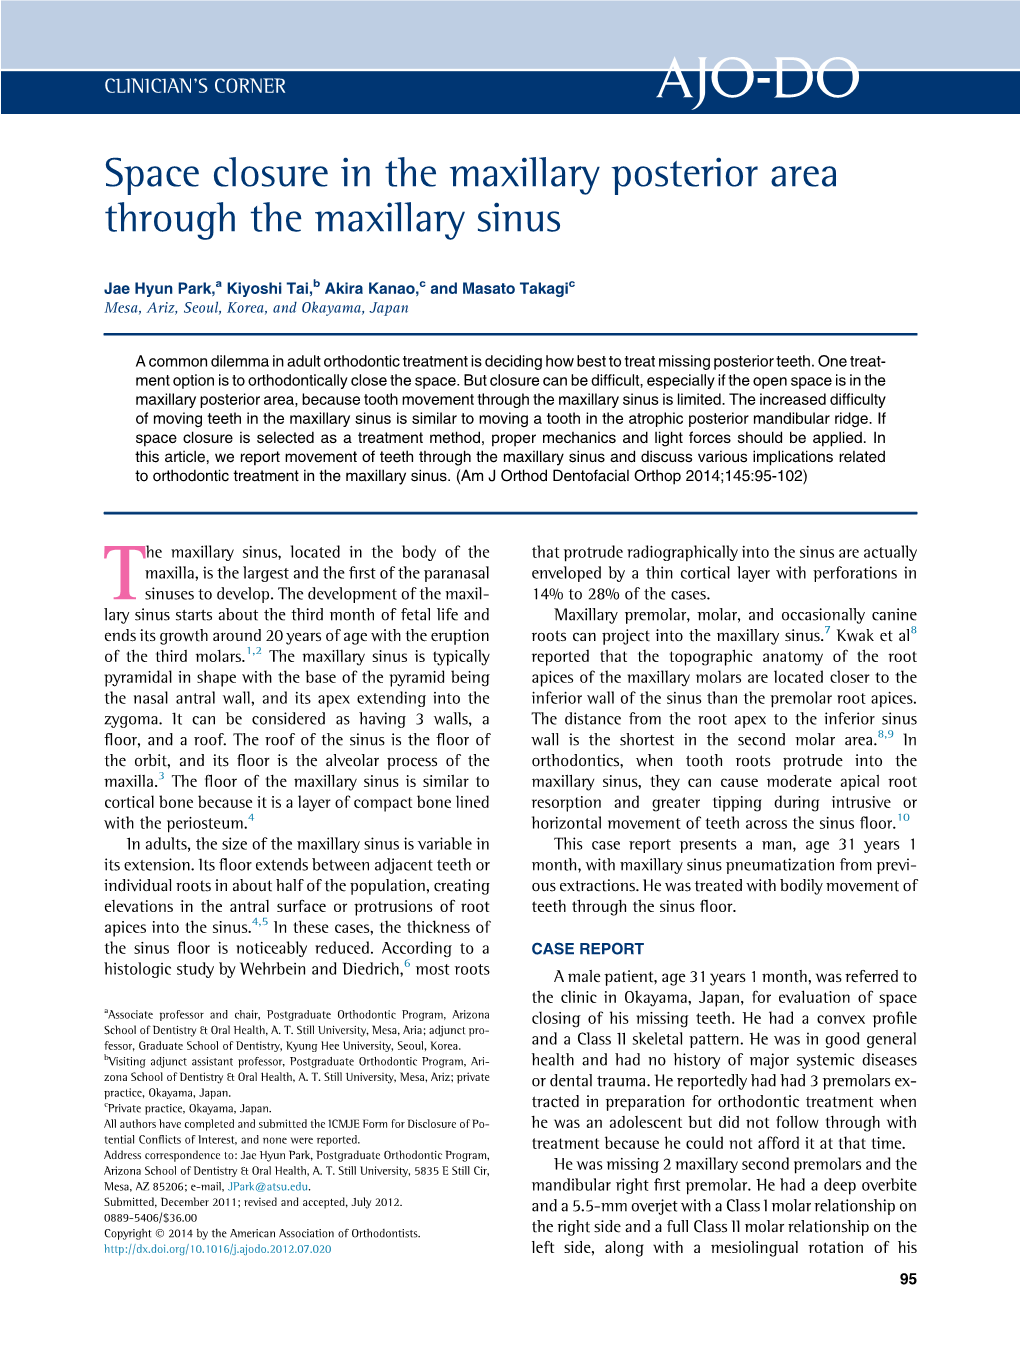 Space Closure in the Maxillary Posterior Area Through the Maxillary Sinus